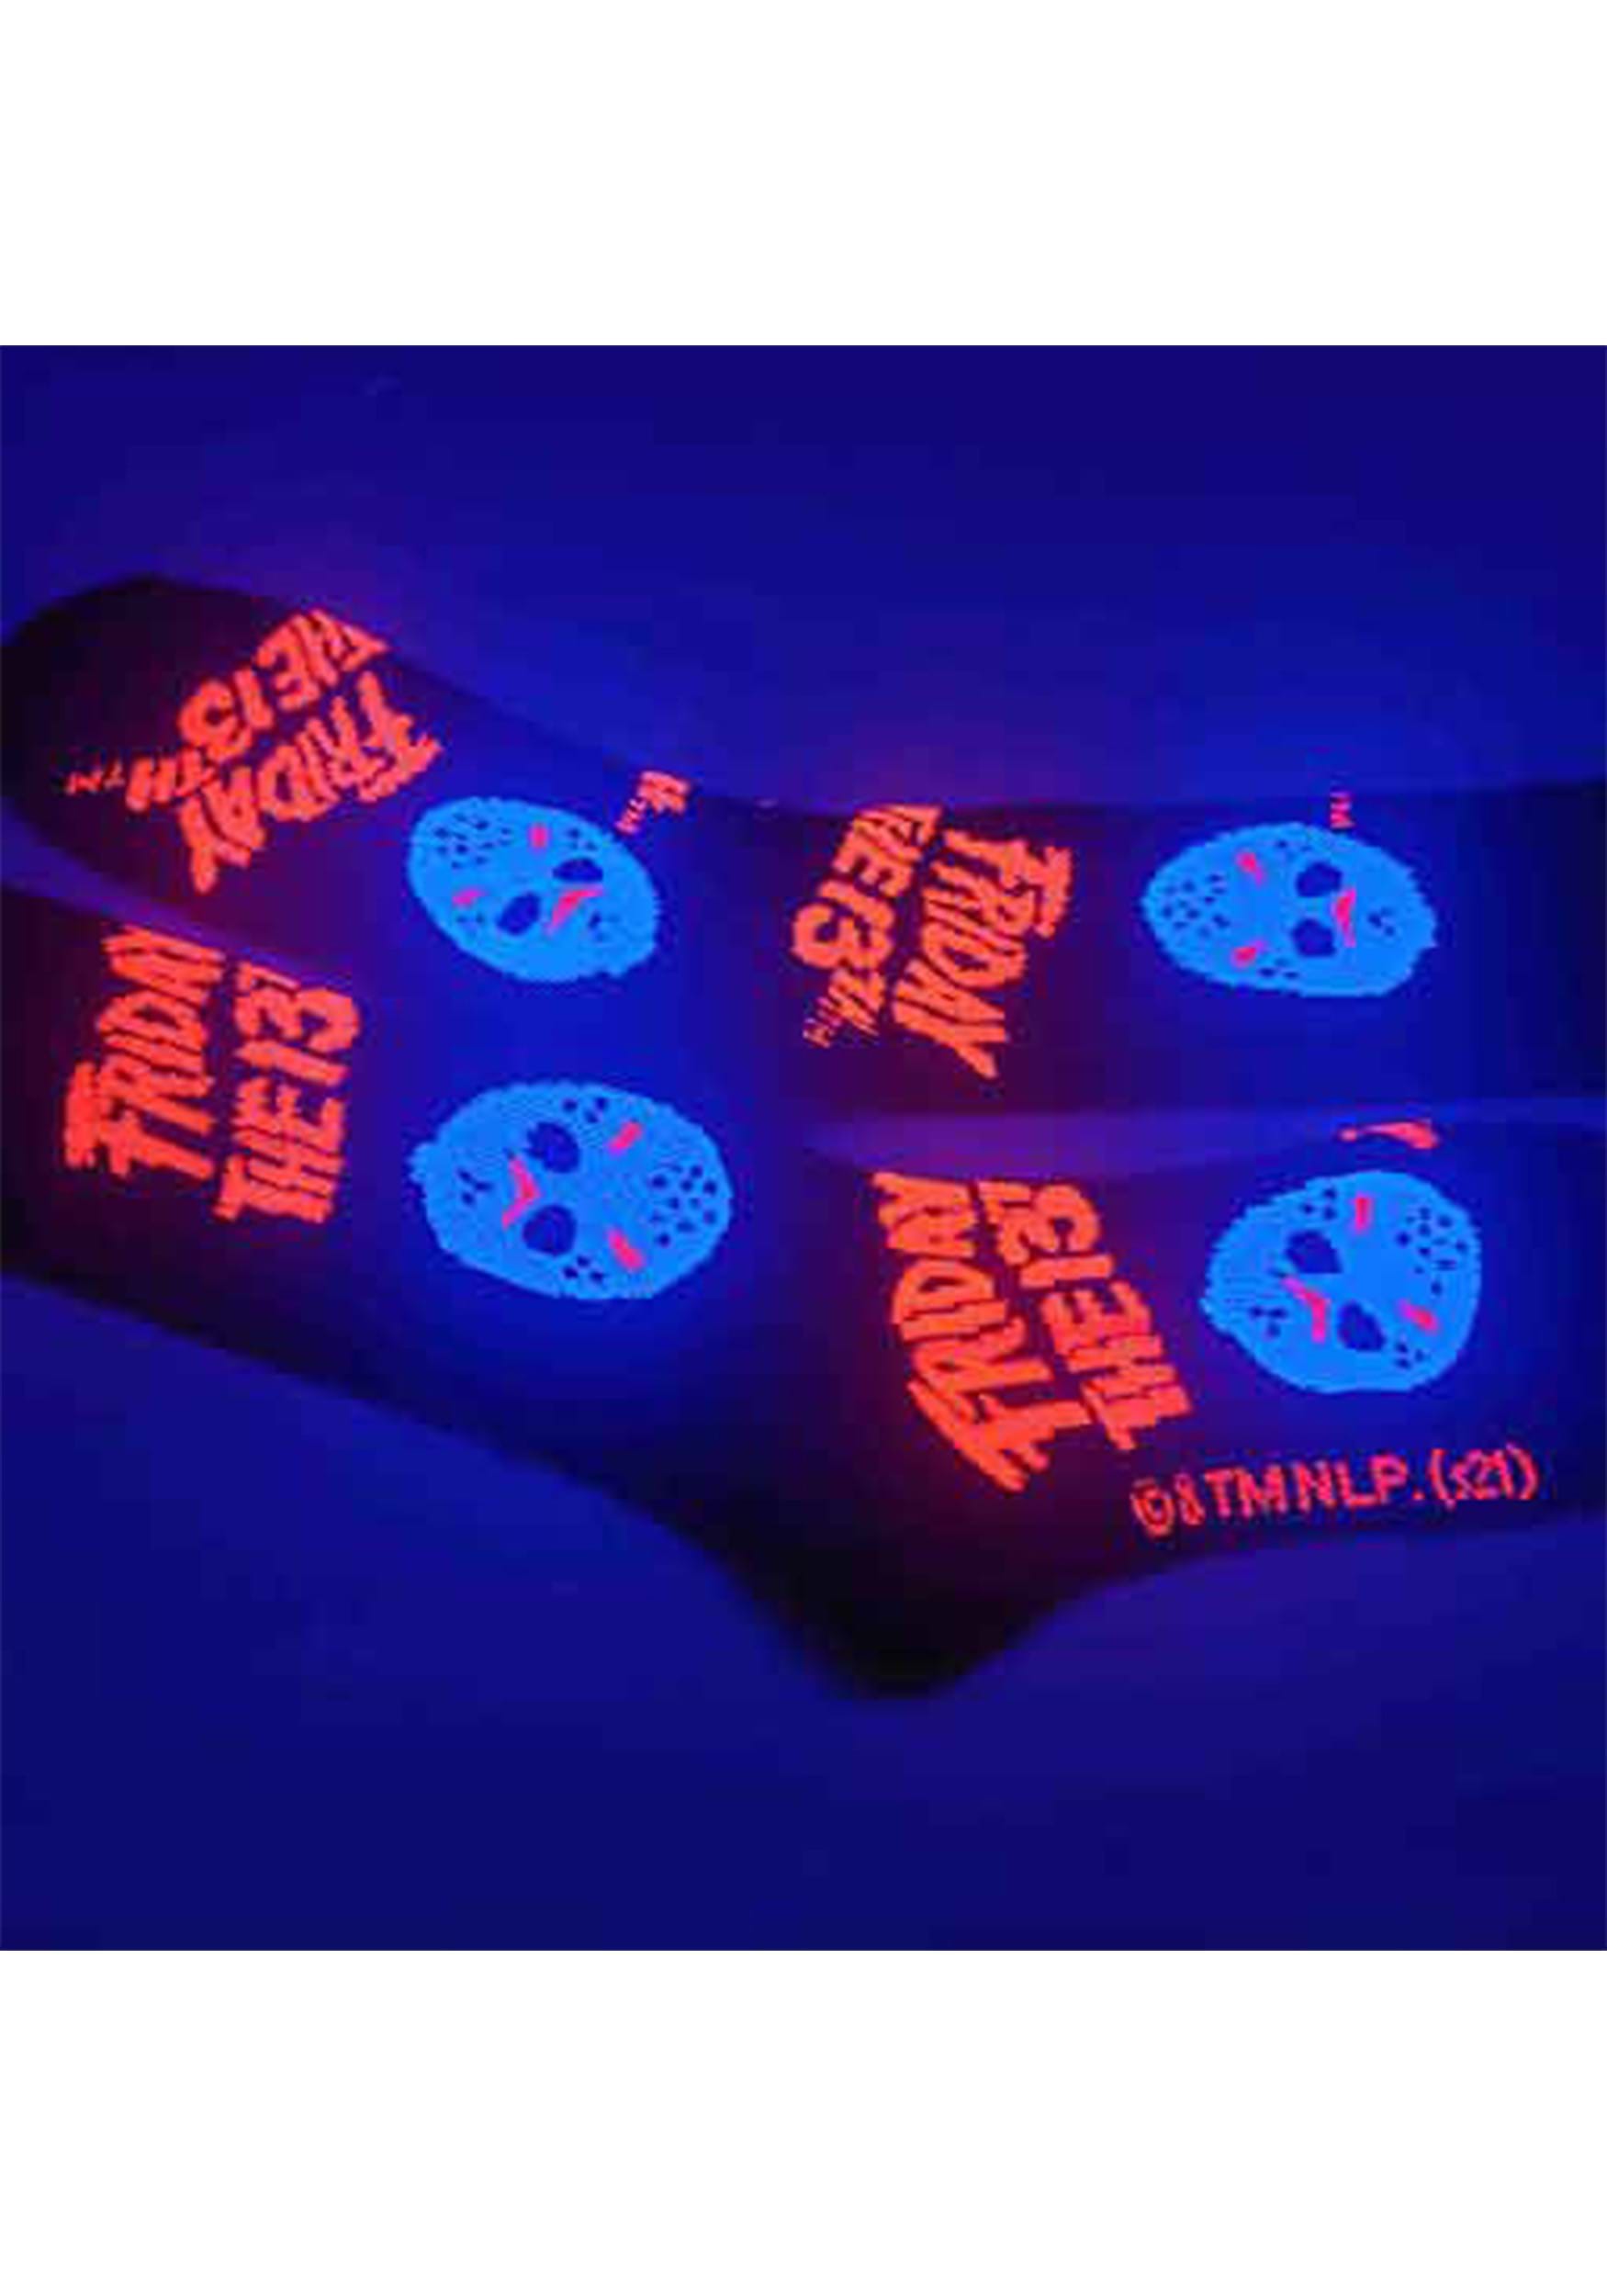 Friday The 13th Jason Icons Black Light Crew Socks